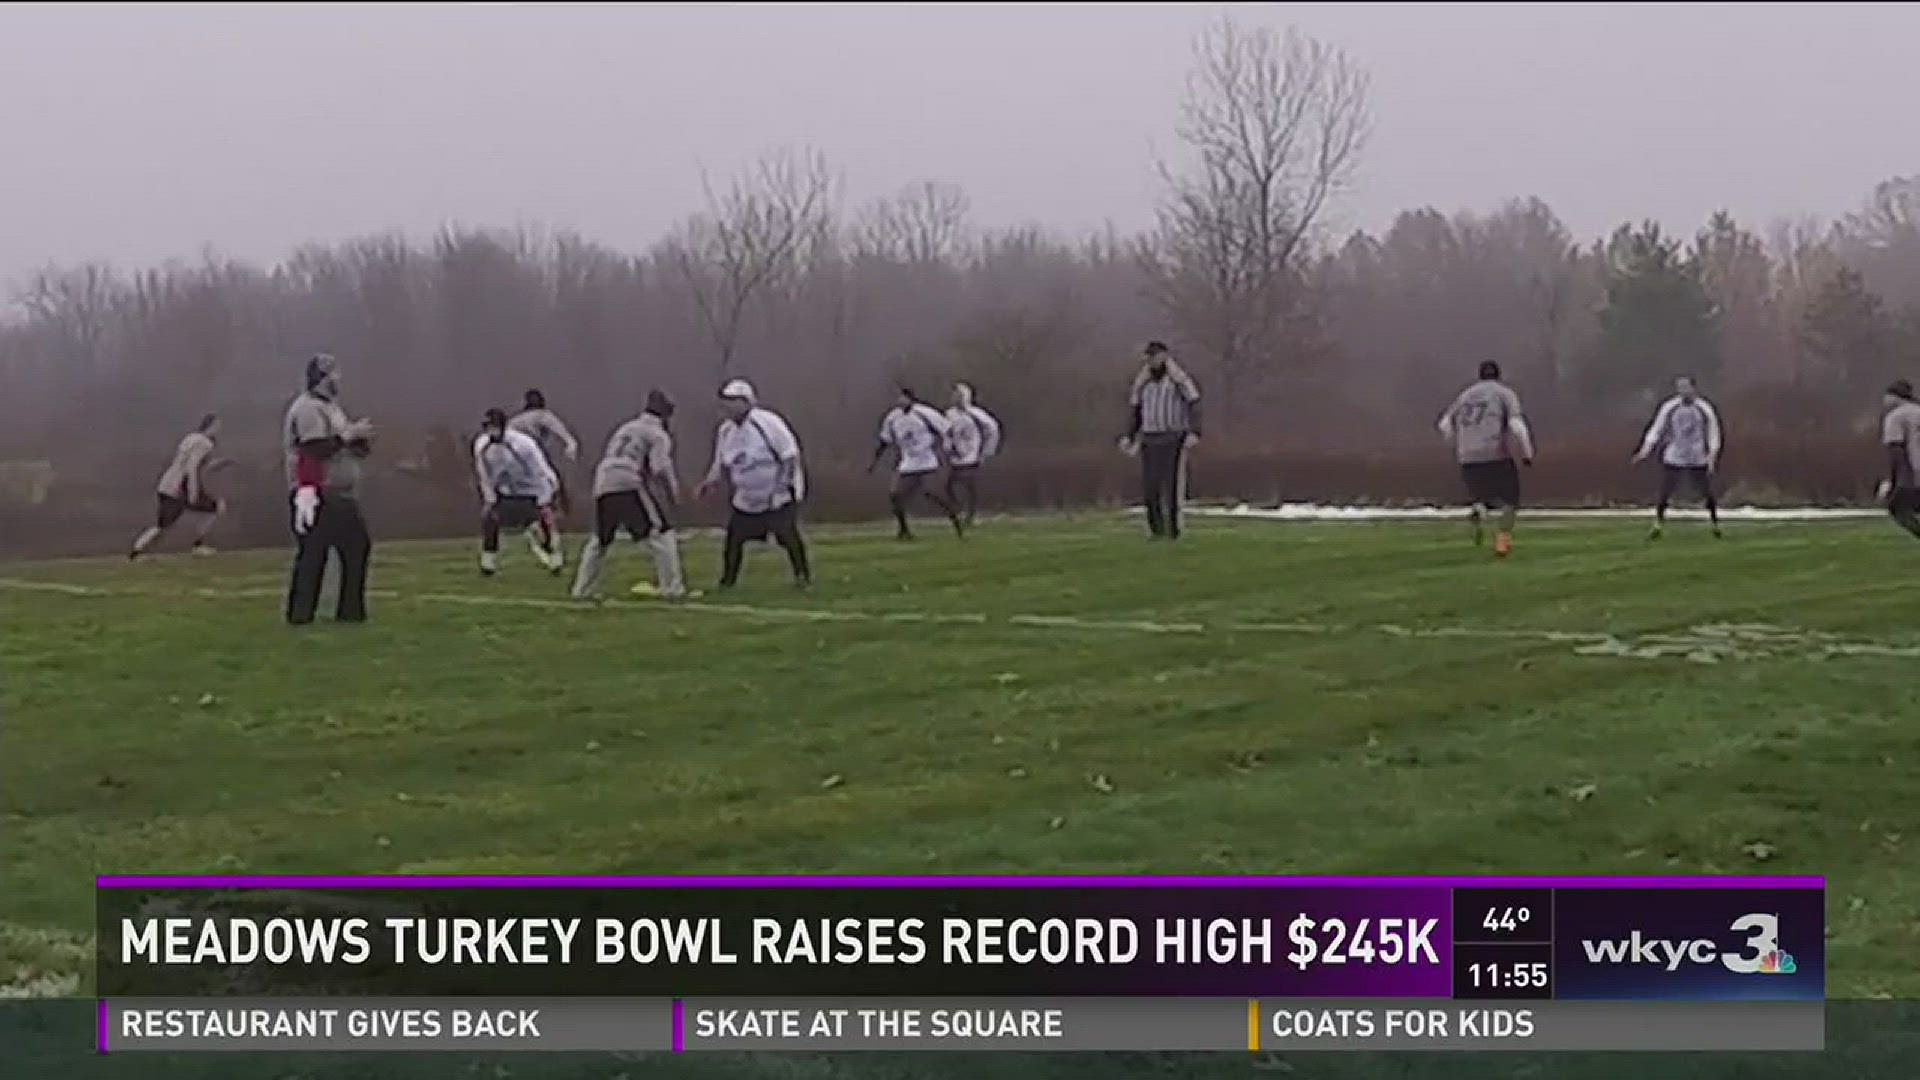 Meadows Turkey Bowl raises record high